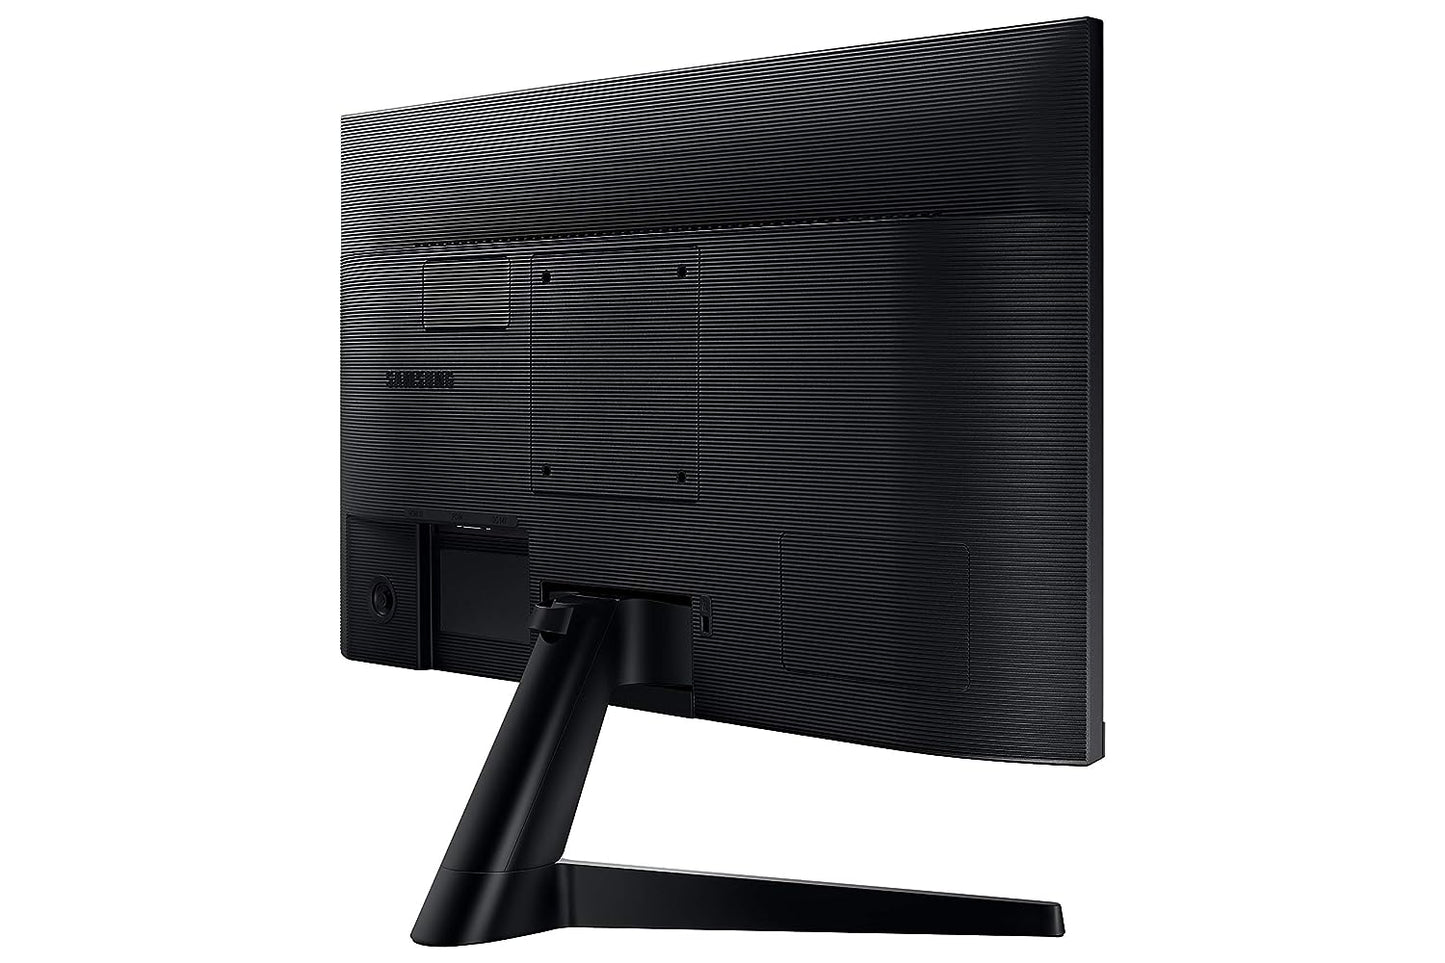 SAMSUNG 22 inch Full HD LED Backlit IPS Panel Monitor (LF22T350FHWXXL)